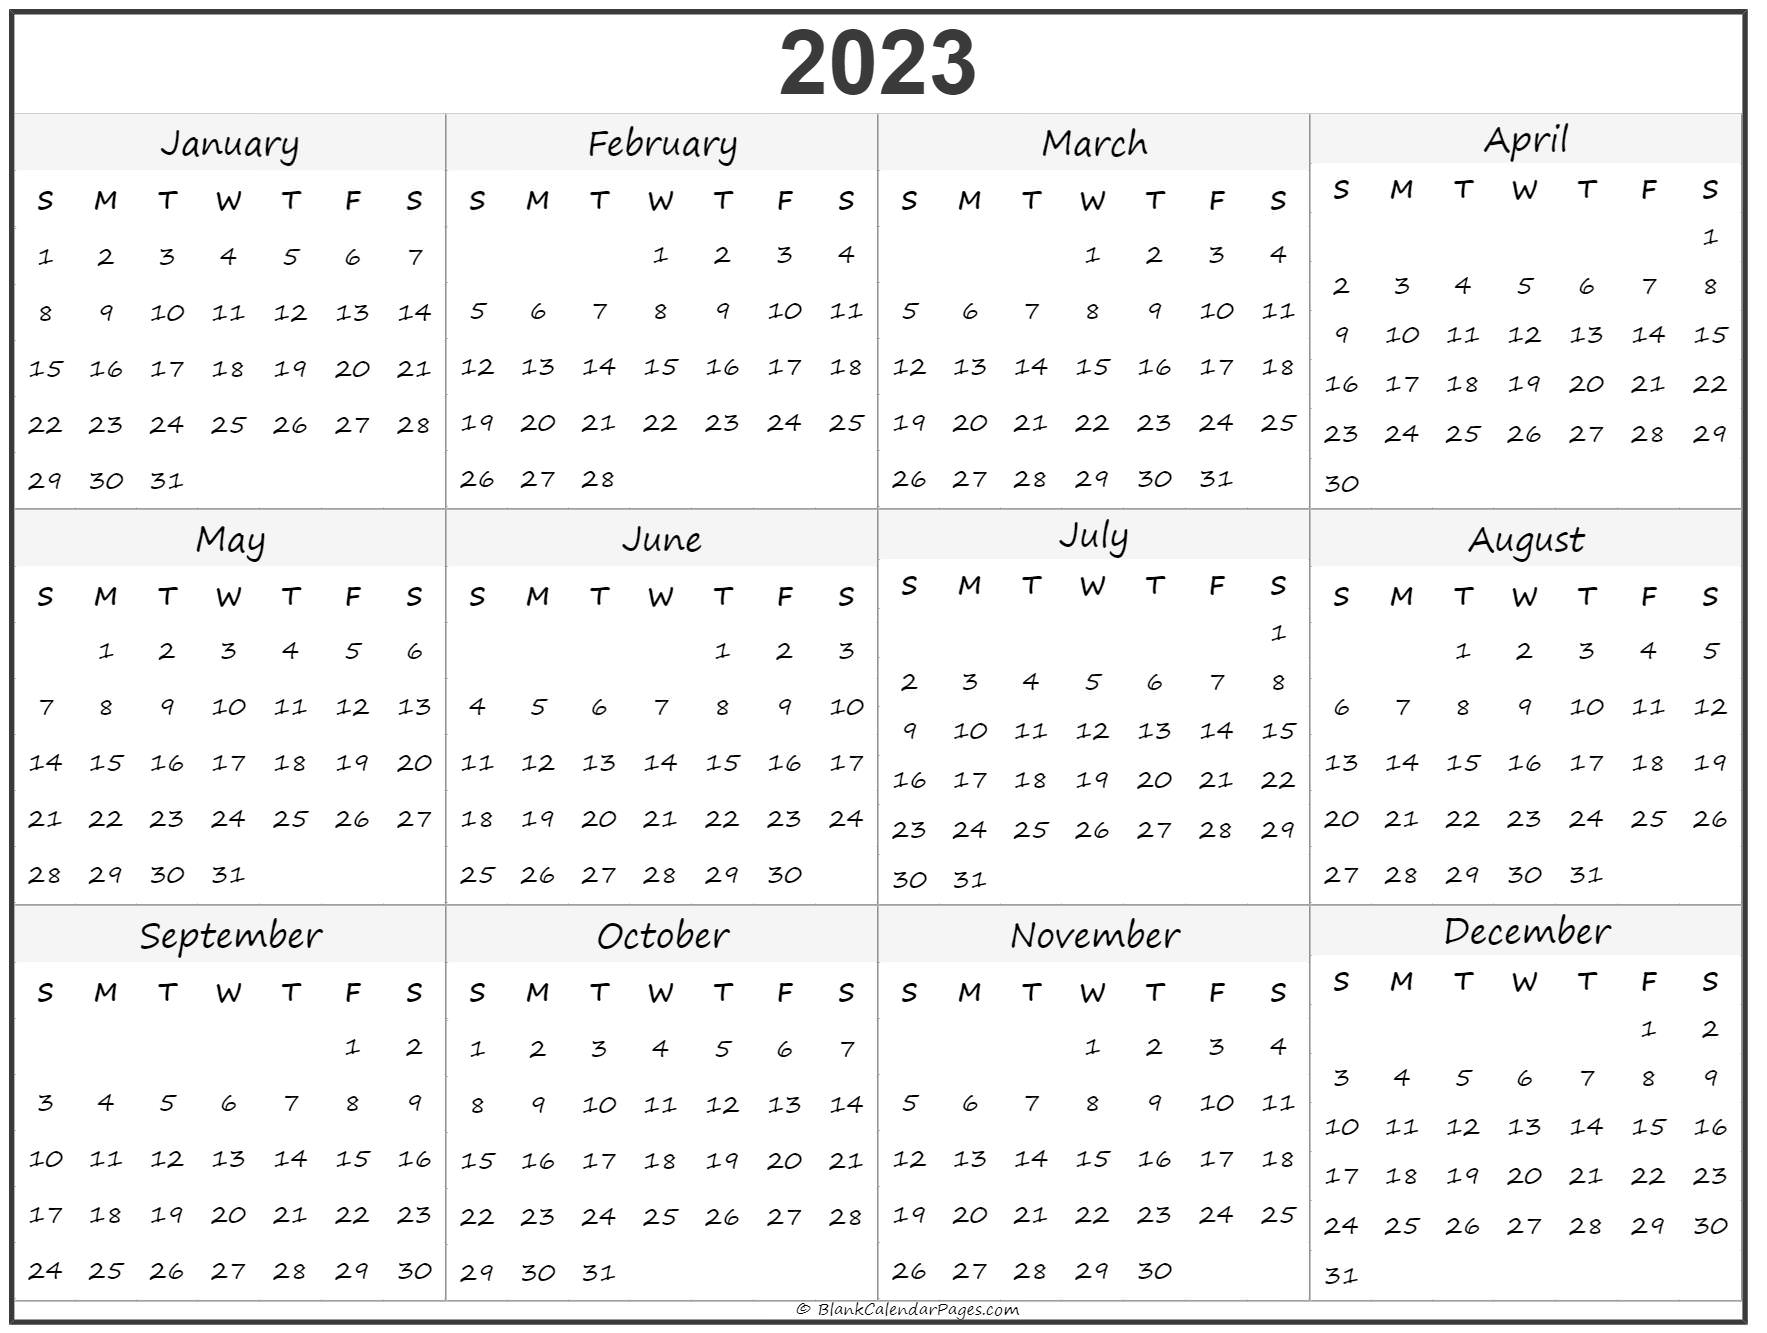 2023-calendar-templates-and-images-2023-calendar-pdf-word-excel